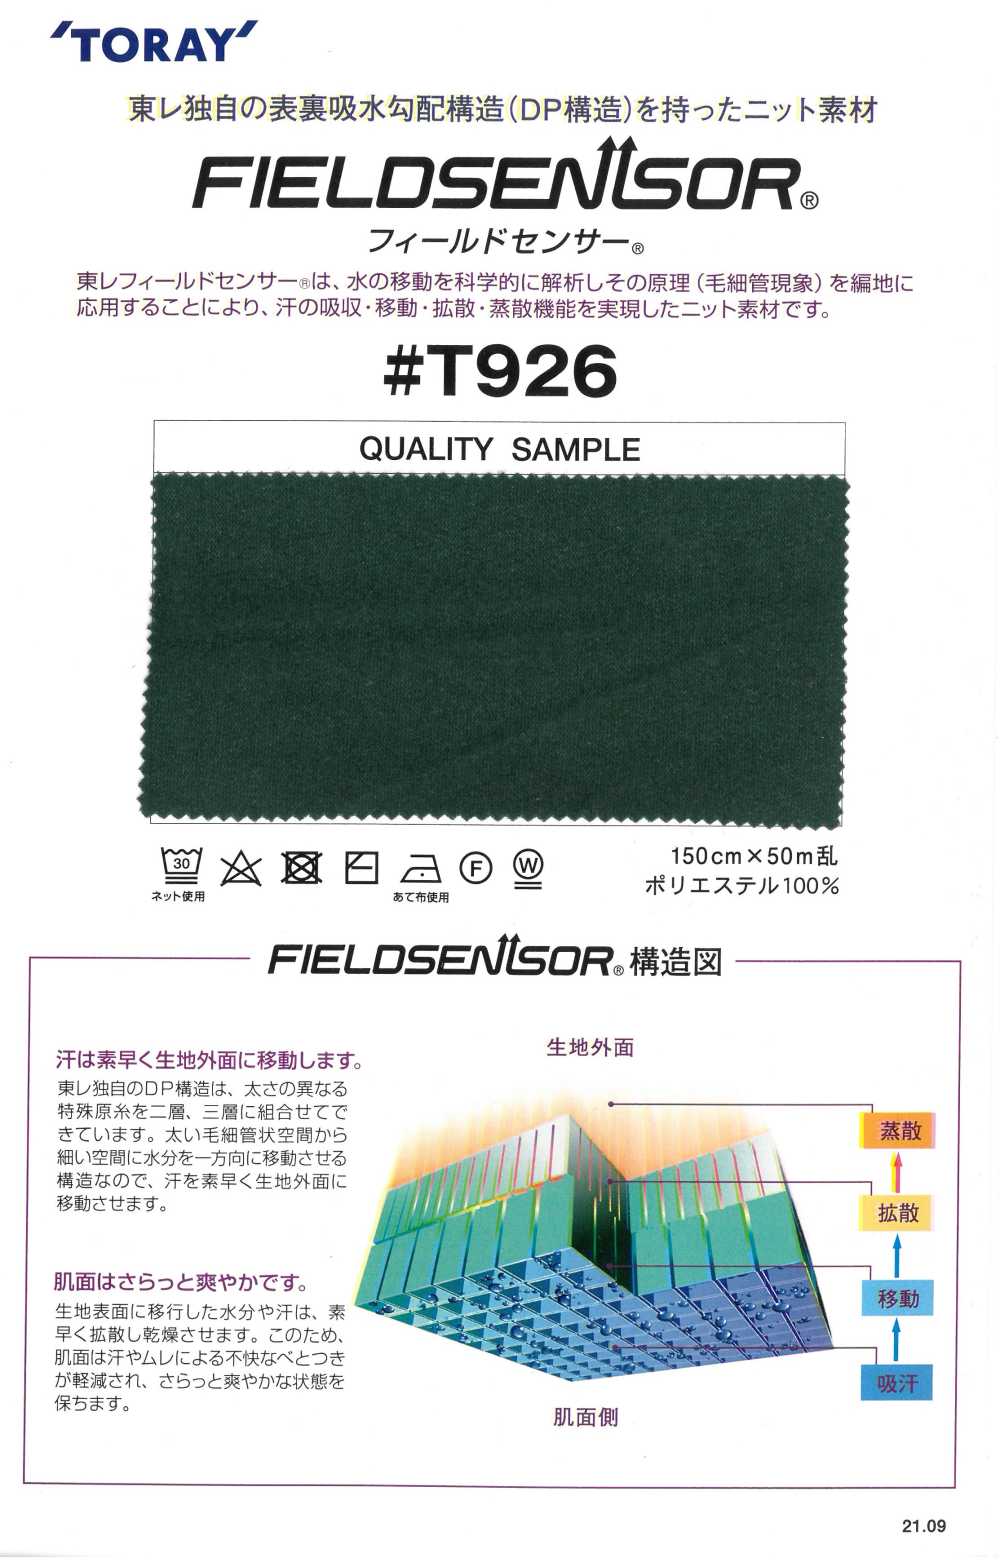 T926 Material Tejido TORAY Field Sensor® Para Ropa Interior (Tipo Borroso)[Fabrica Textil] Tamurakoma